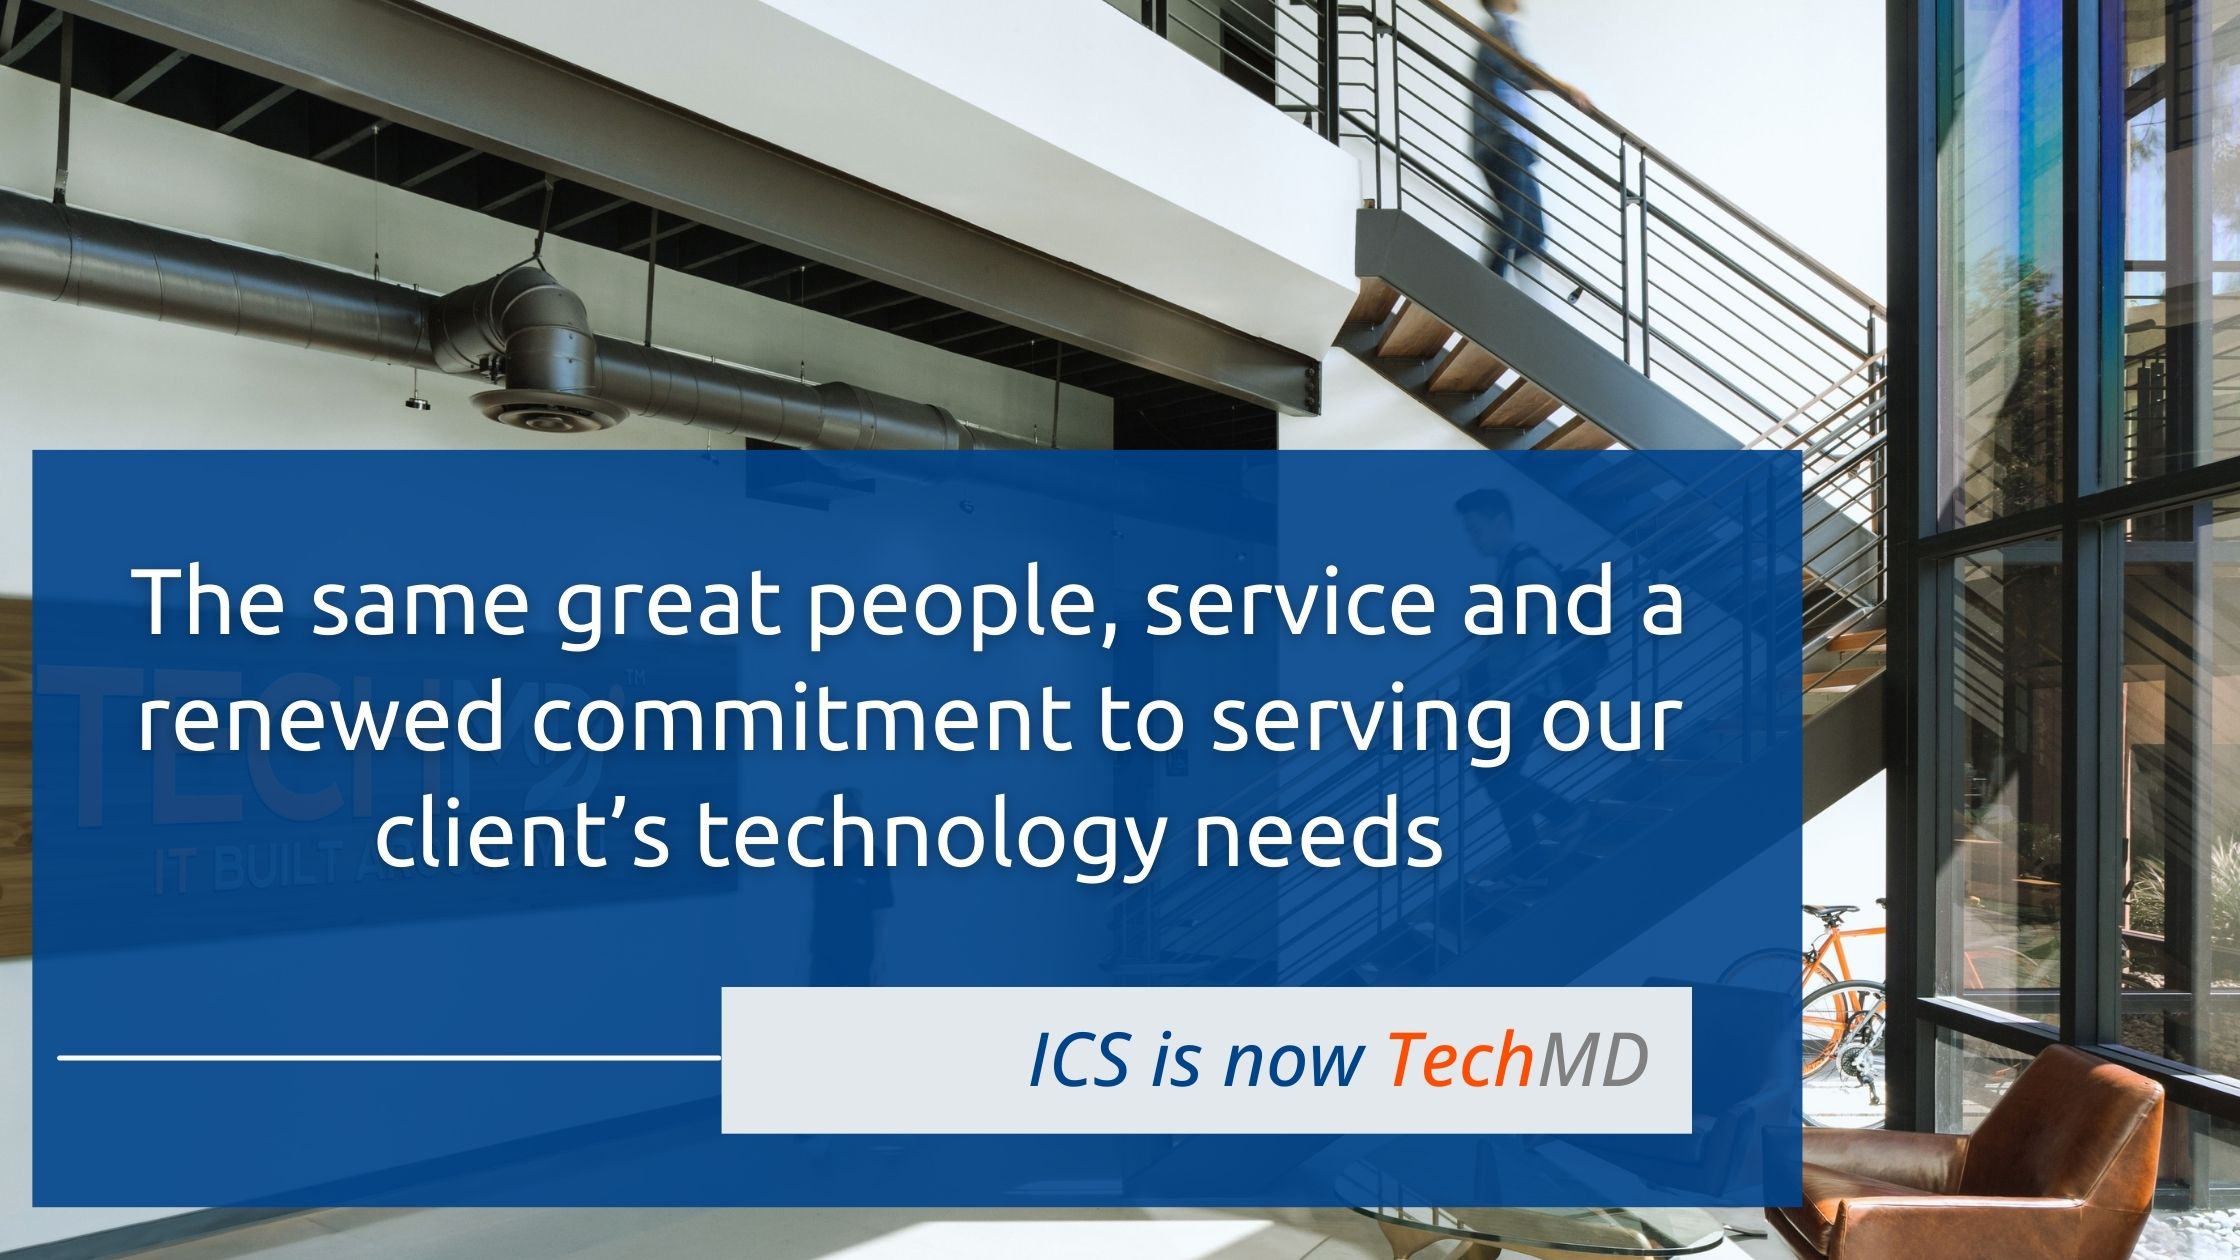 ICS is now TechMD